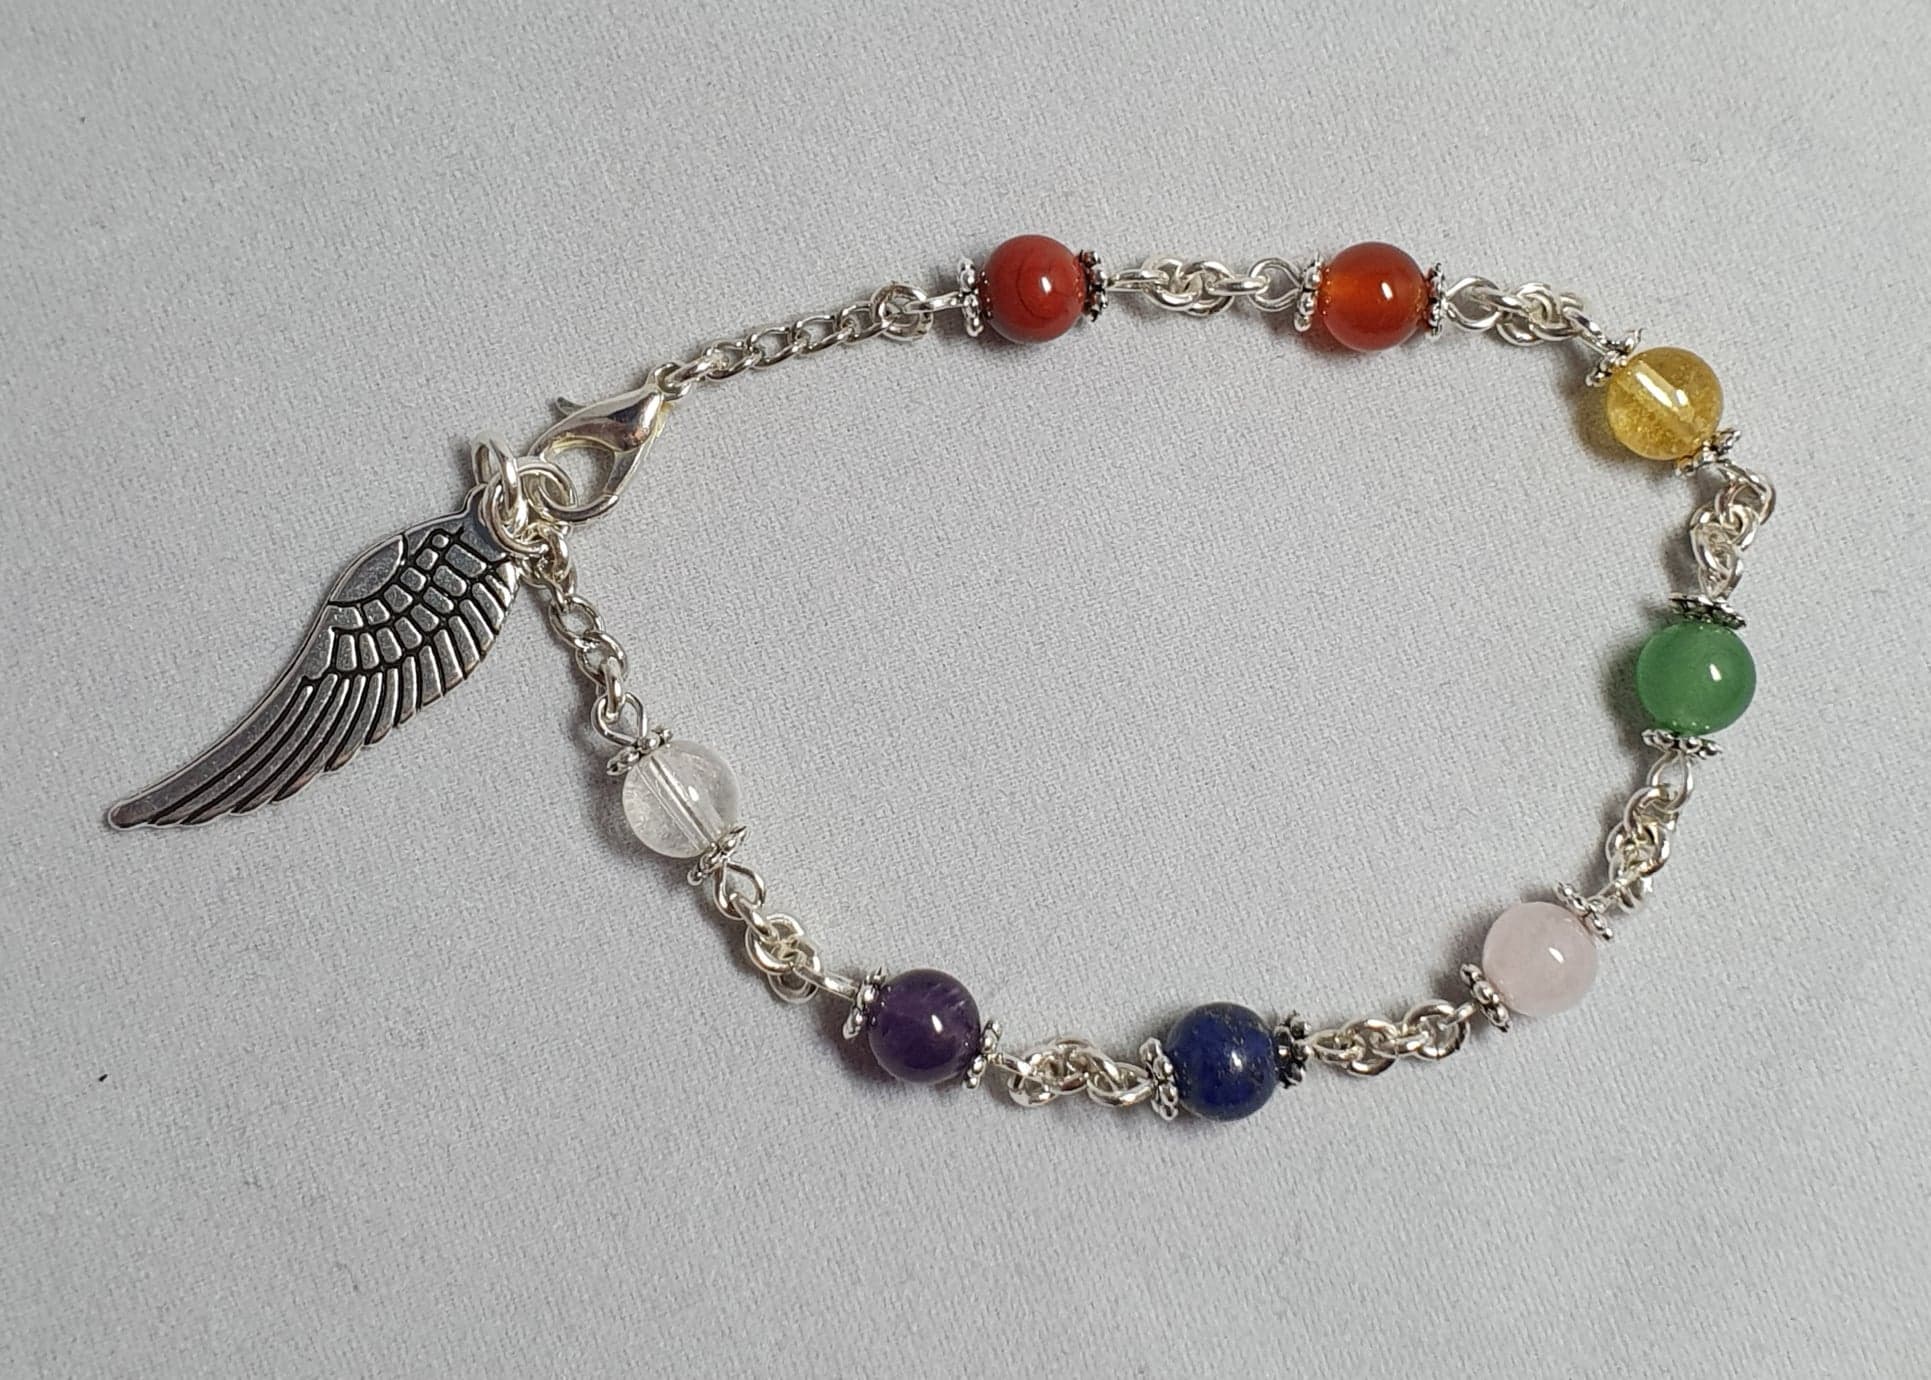 Chakra bracelet, silver colour chain and charm